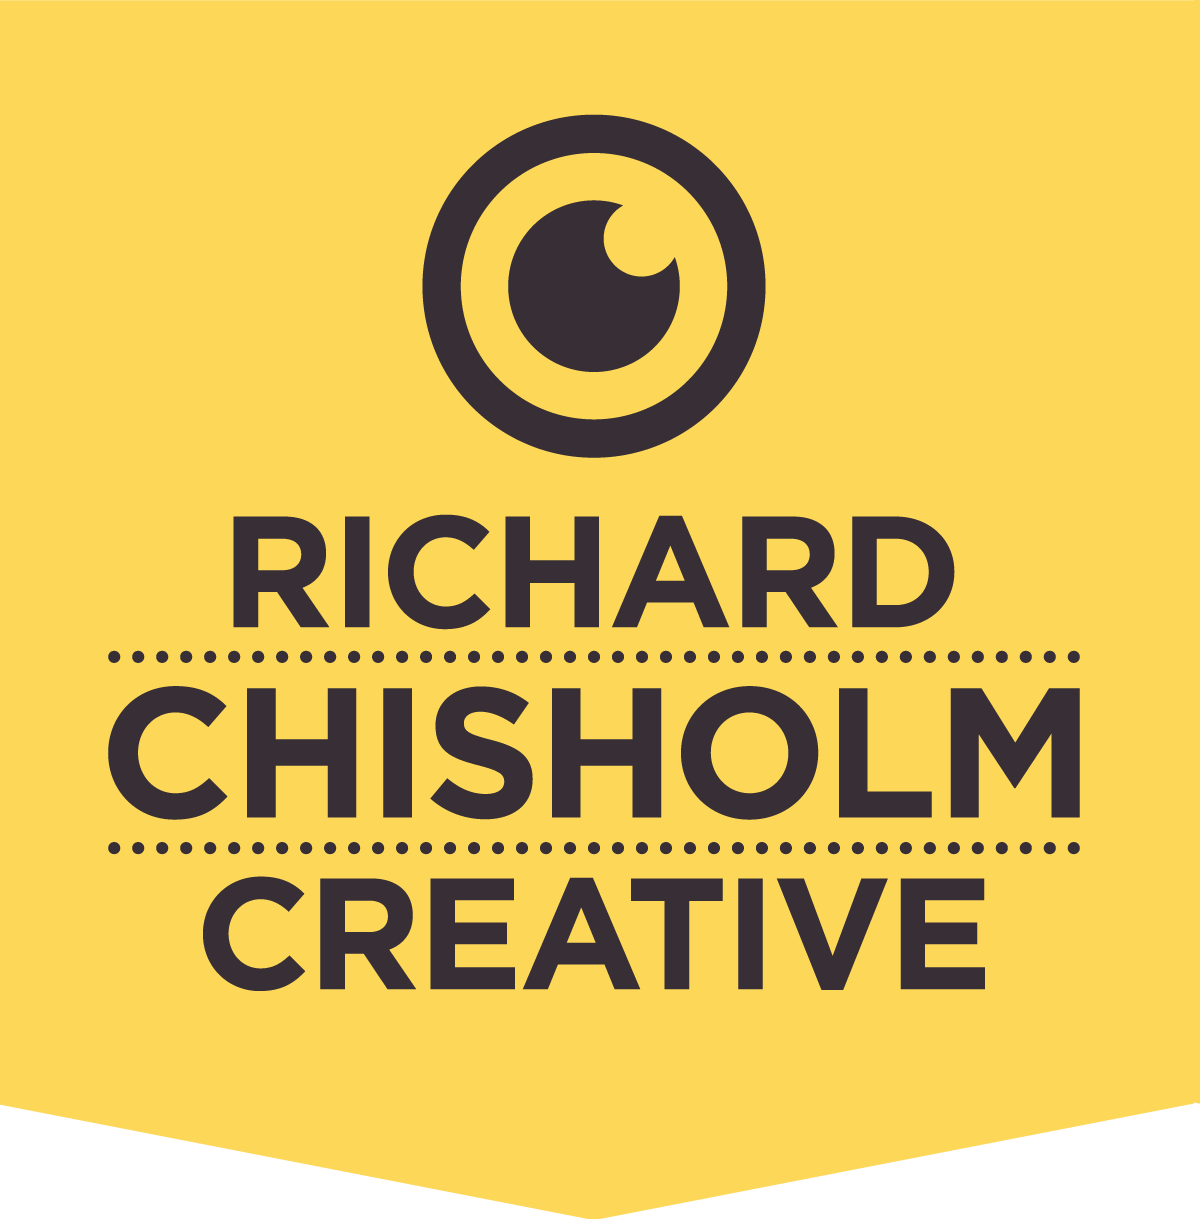 Richard Chisholm Creative